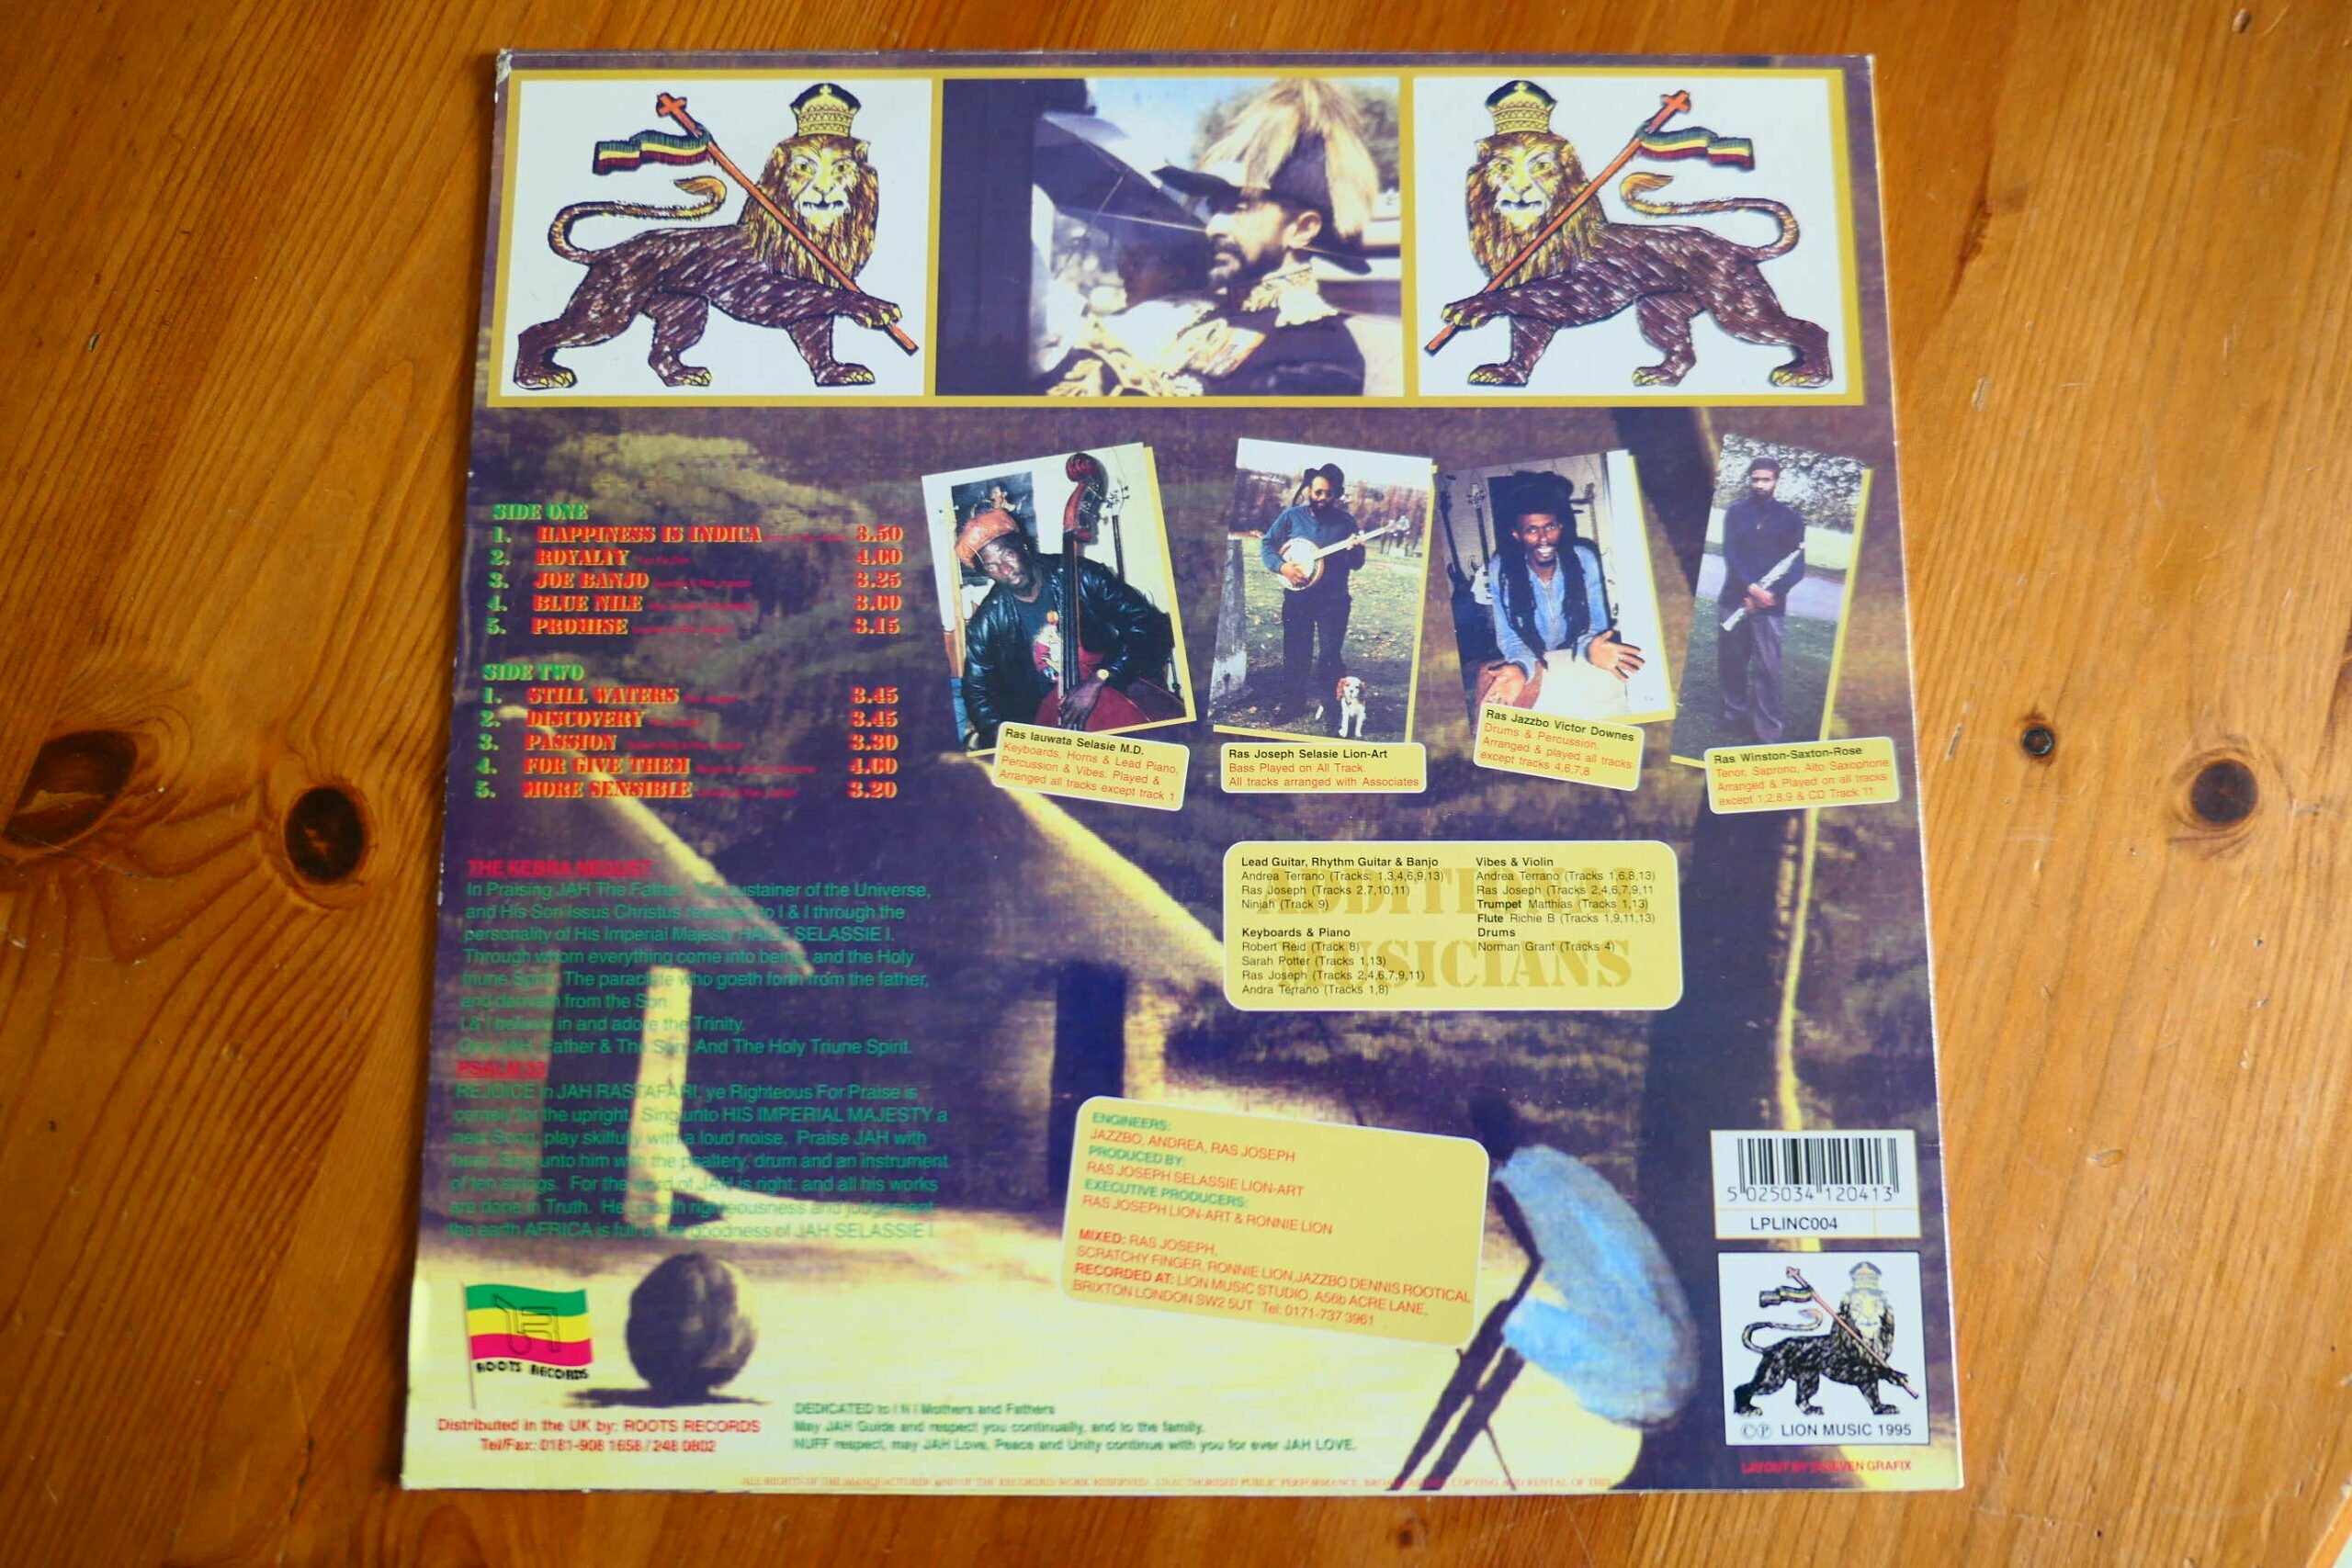 KEBRA SELASSIE - THROUGH DEEP MEDITATION LP - Nr MINT A1/B1 UK REGGAE